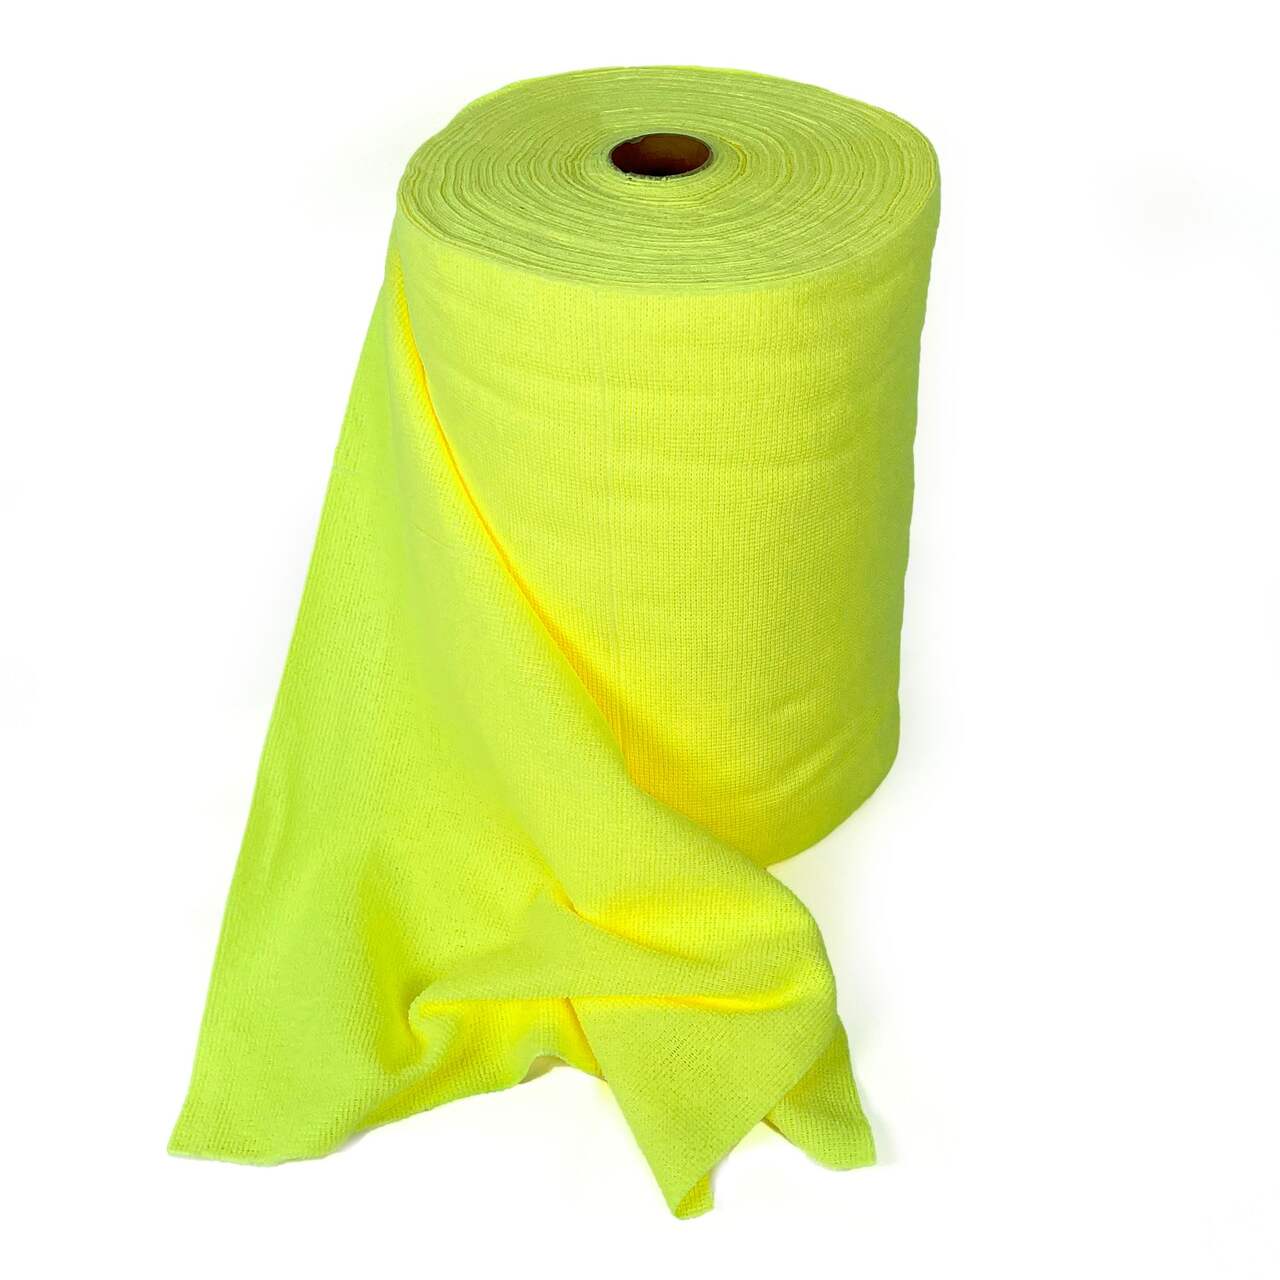 Tear-N-Clean Microfibre Cloth Roll, Machine Washable, Yellow, 80-pc